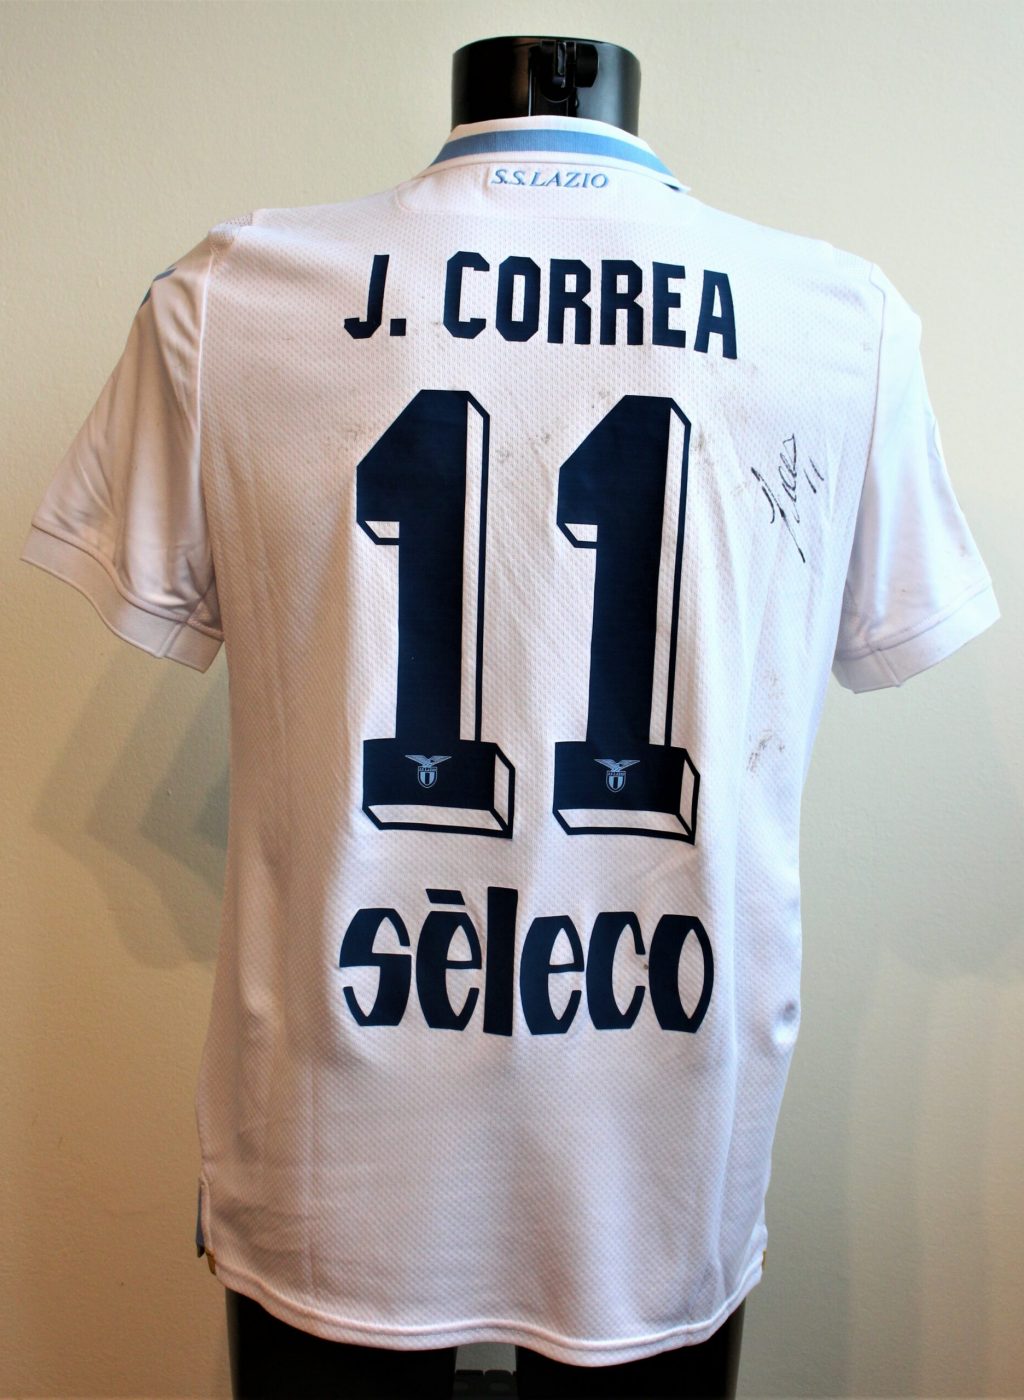 Correa Jersey 3 vs Chievo 02.12.2018